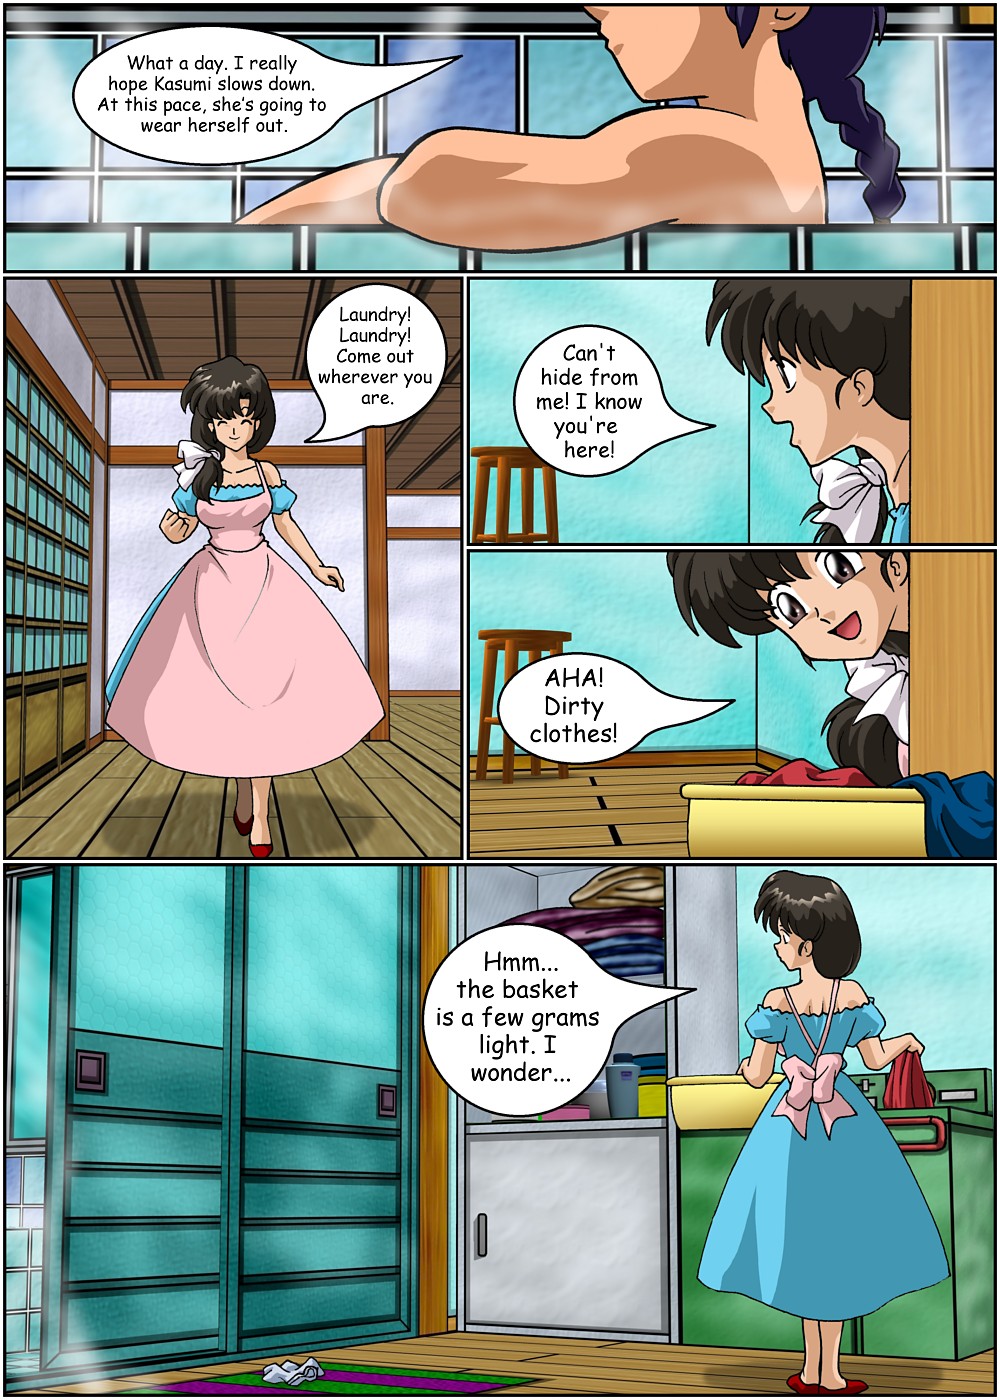 ranma-hentai-keeping-it-clean comic image 16